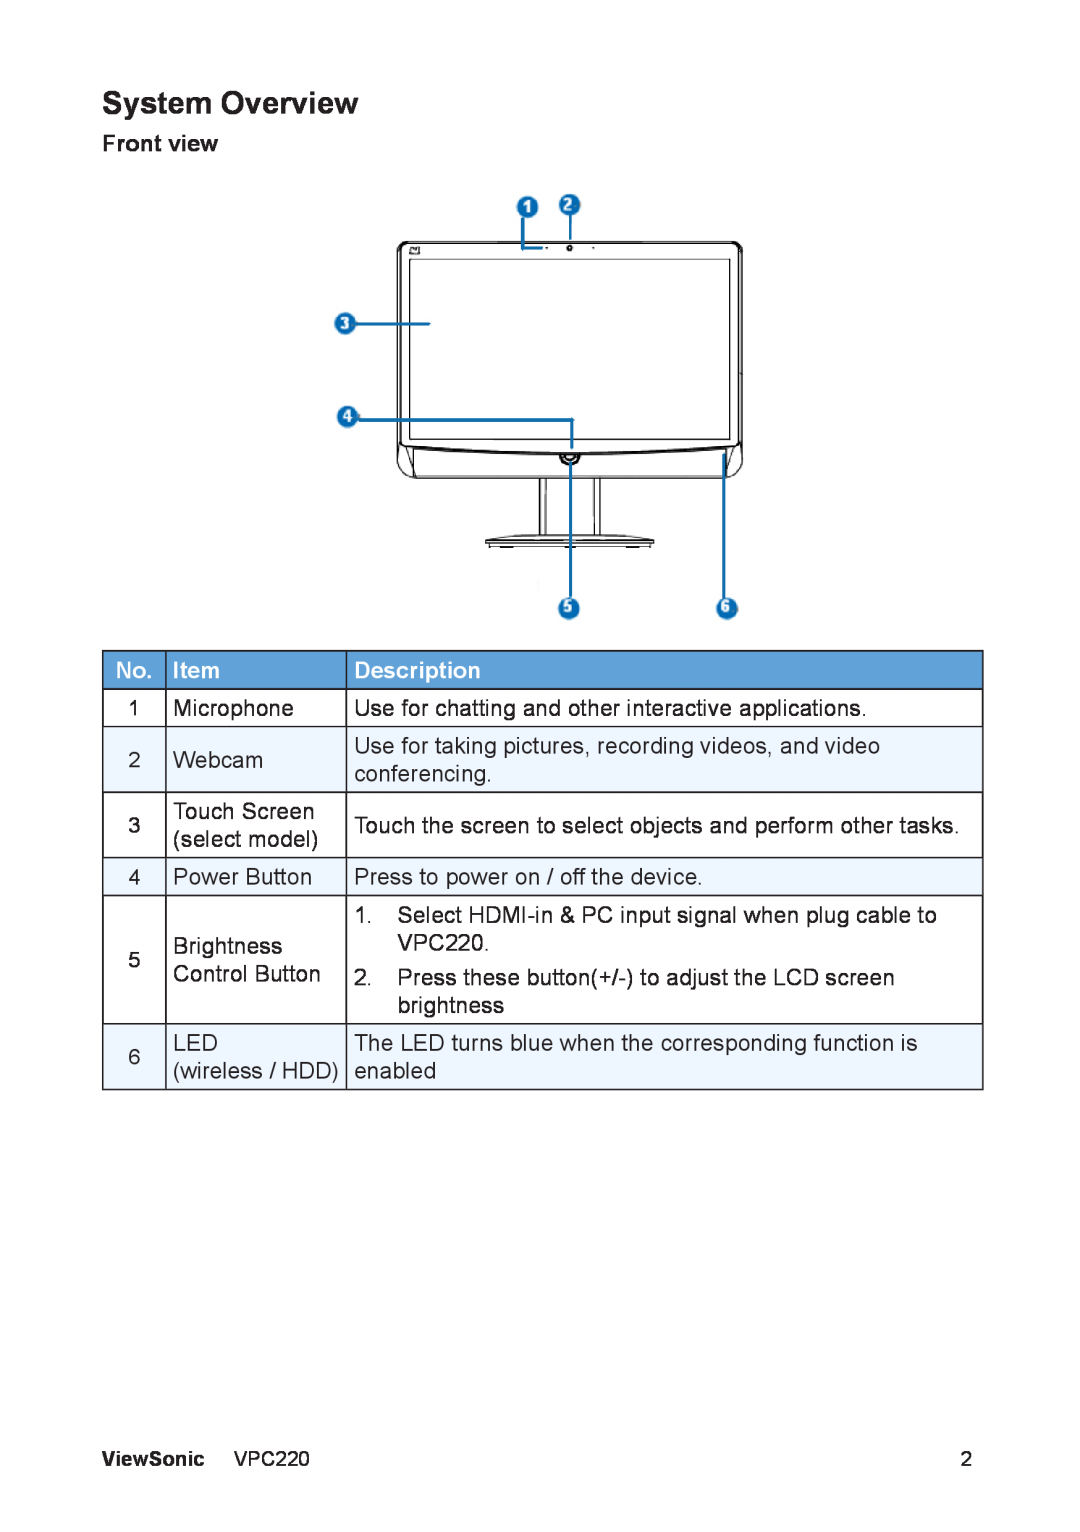 ViewSonic VS13426 manual System Overview, Front view, Description 